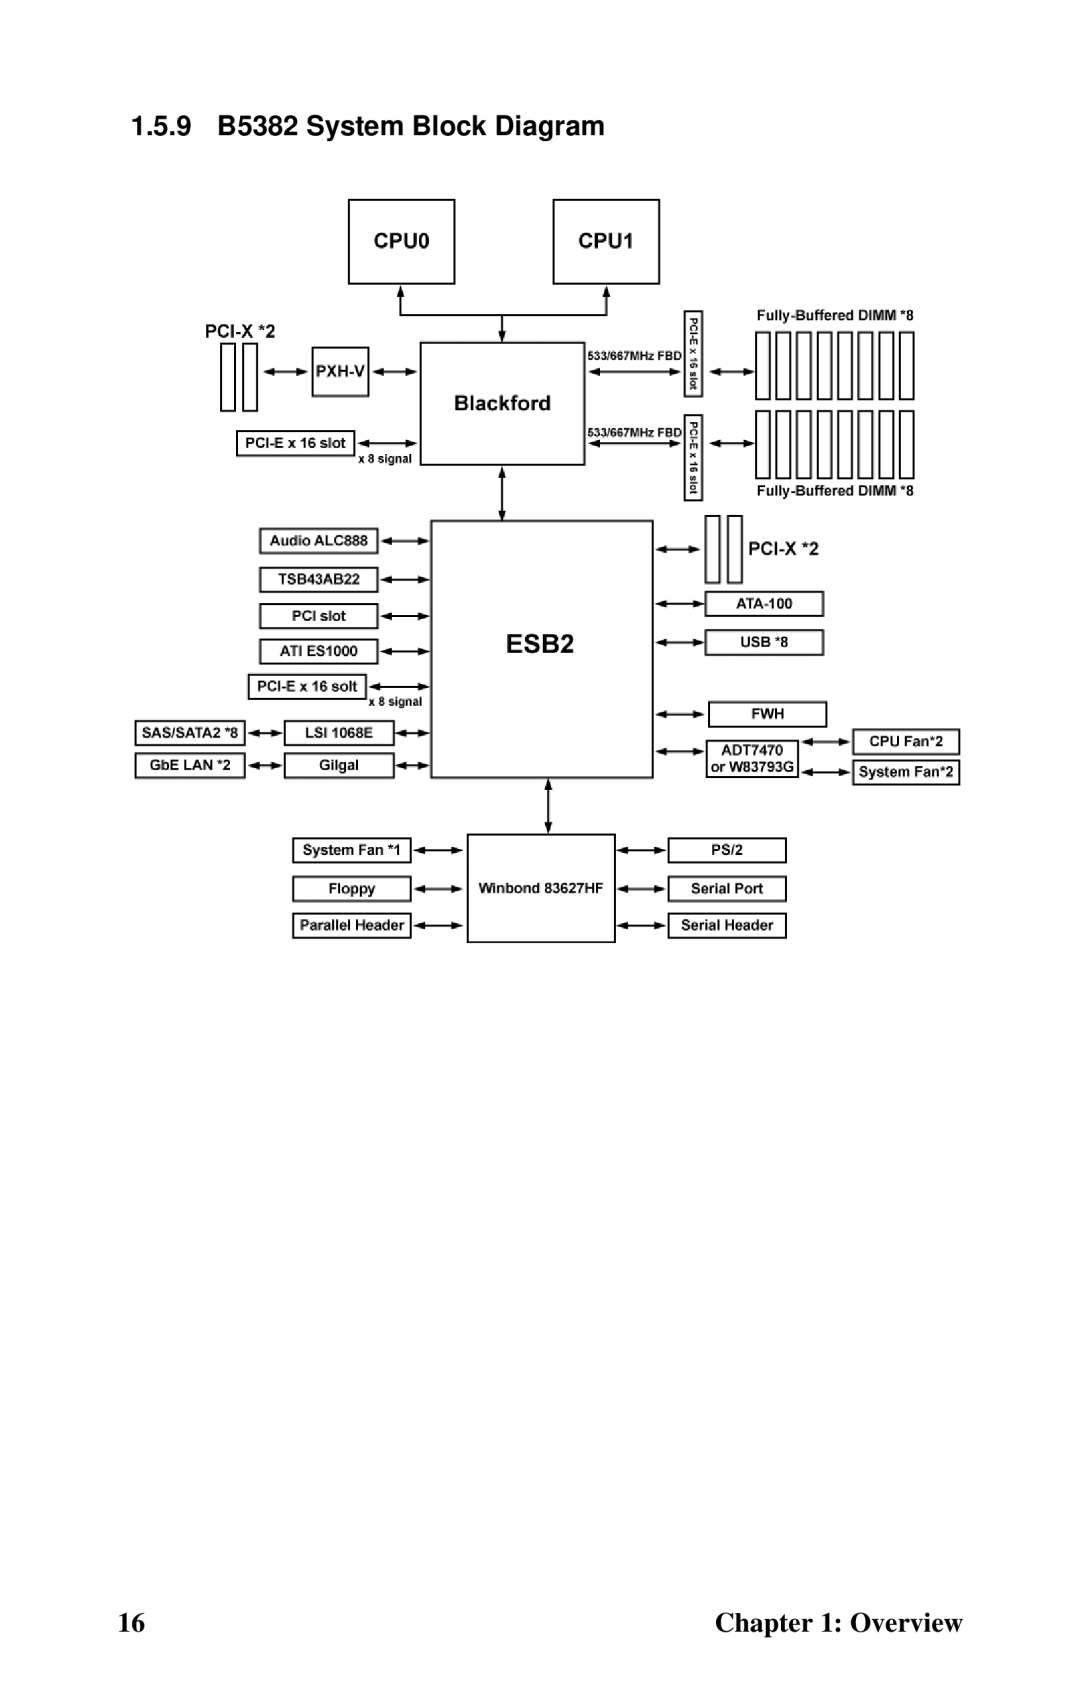 Tyan Computer manual 9 B5382 System Block Diagram 